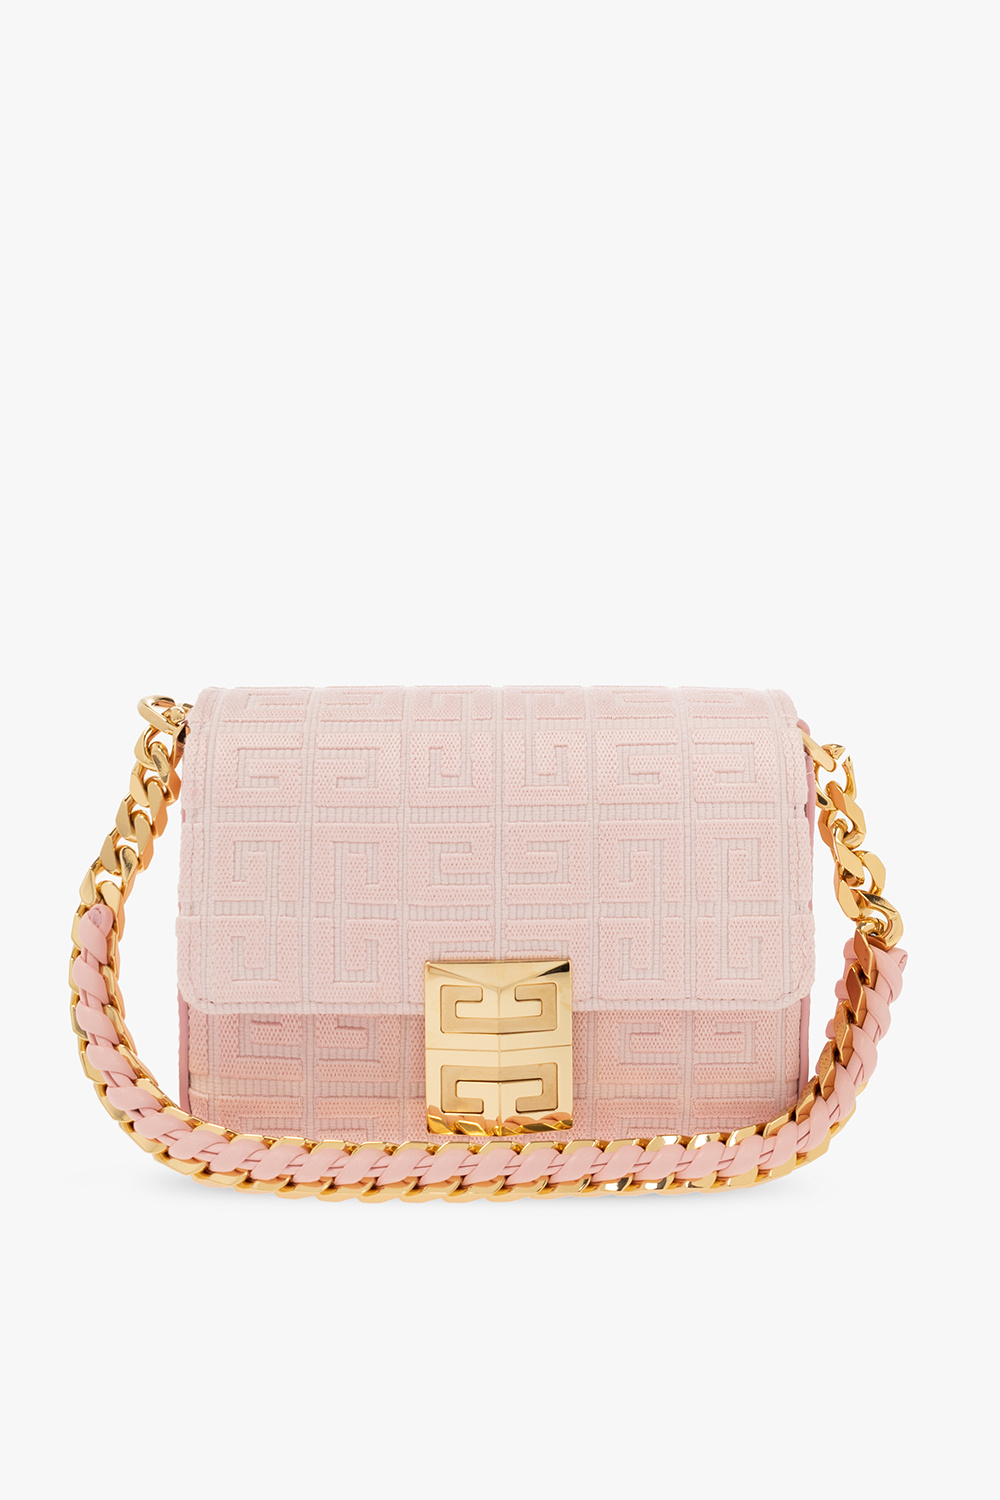 Givenchy ‘4G Small’ shoulder bag